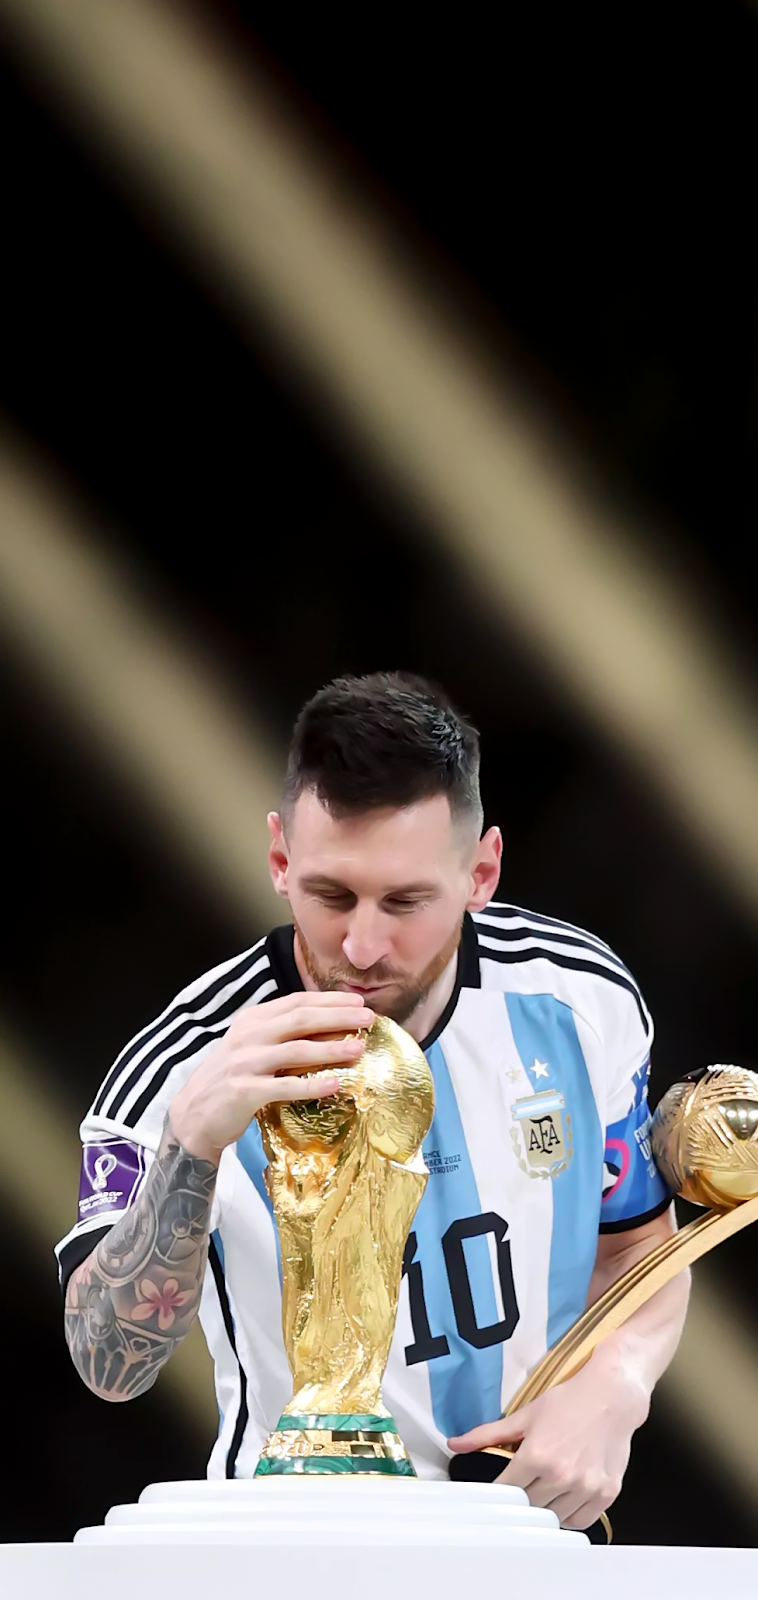 خالدز on Twitter 4k  𝐆𝐎𝐀𝐓  Messi Argentina Wallpapers  httpstcocmuVkOnPTZ  Twitter